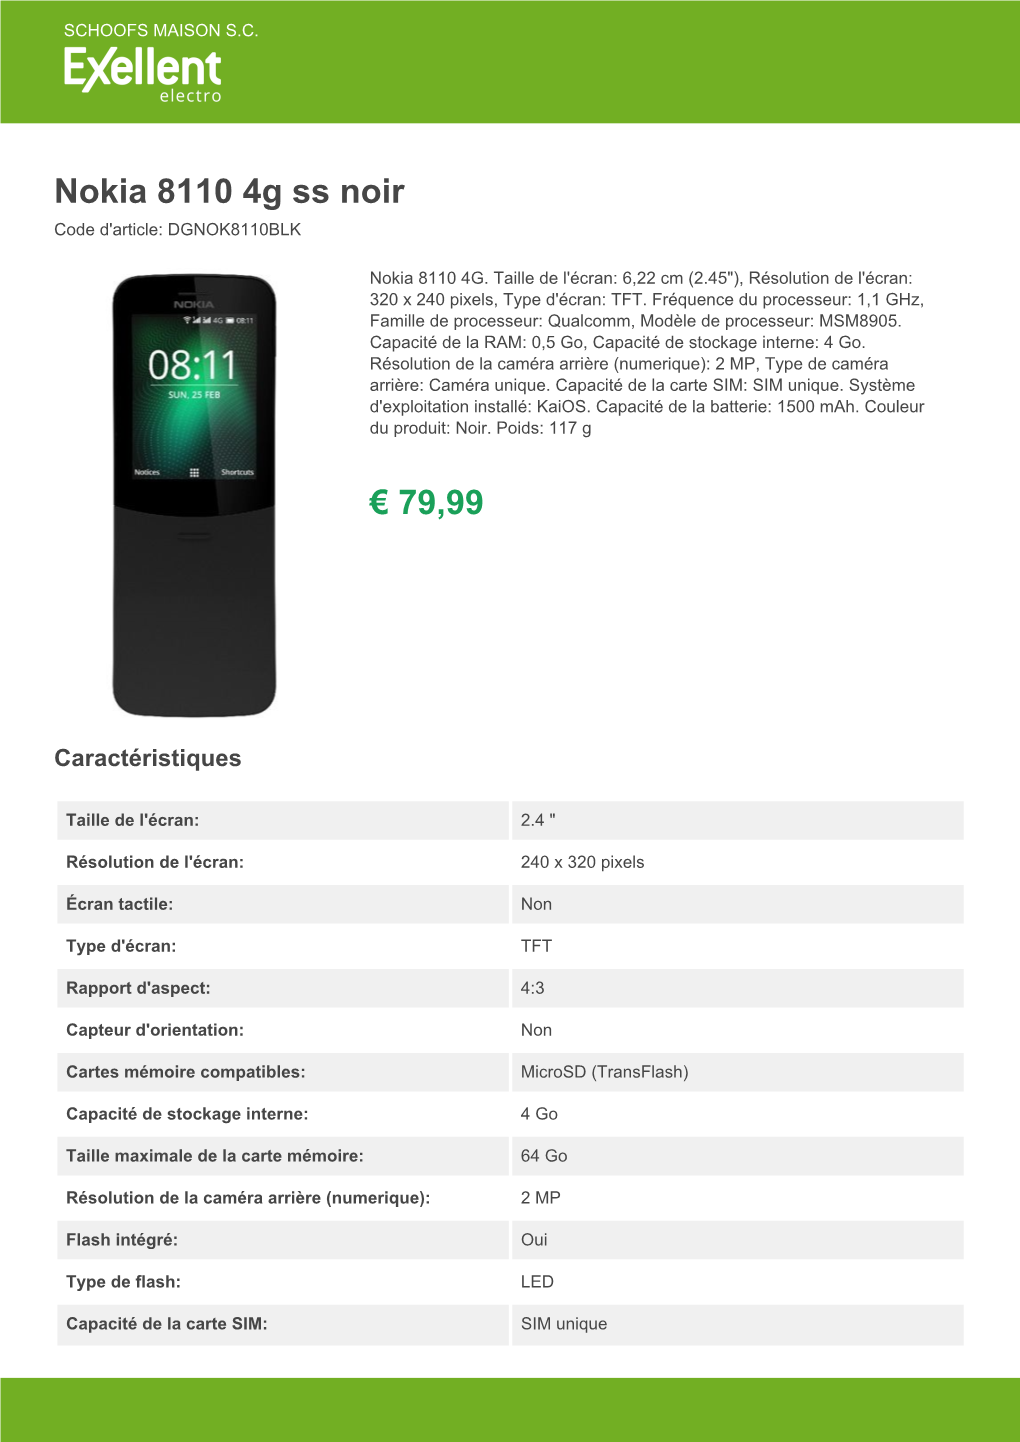 Nokia 8110 4G Ss Noir | PDF Download